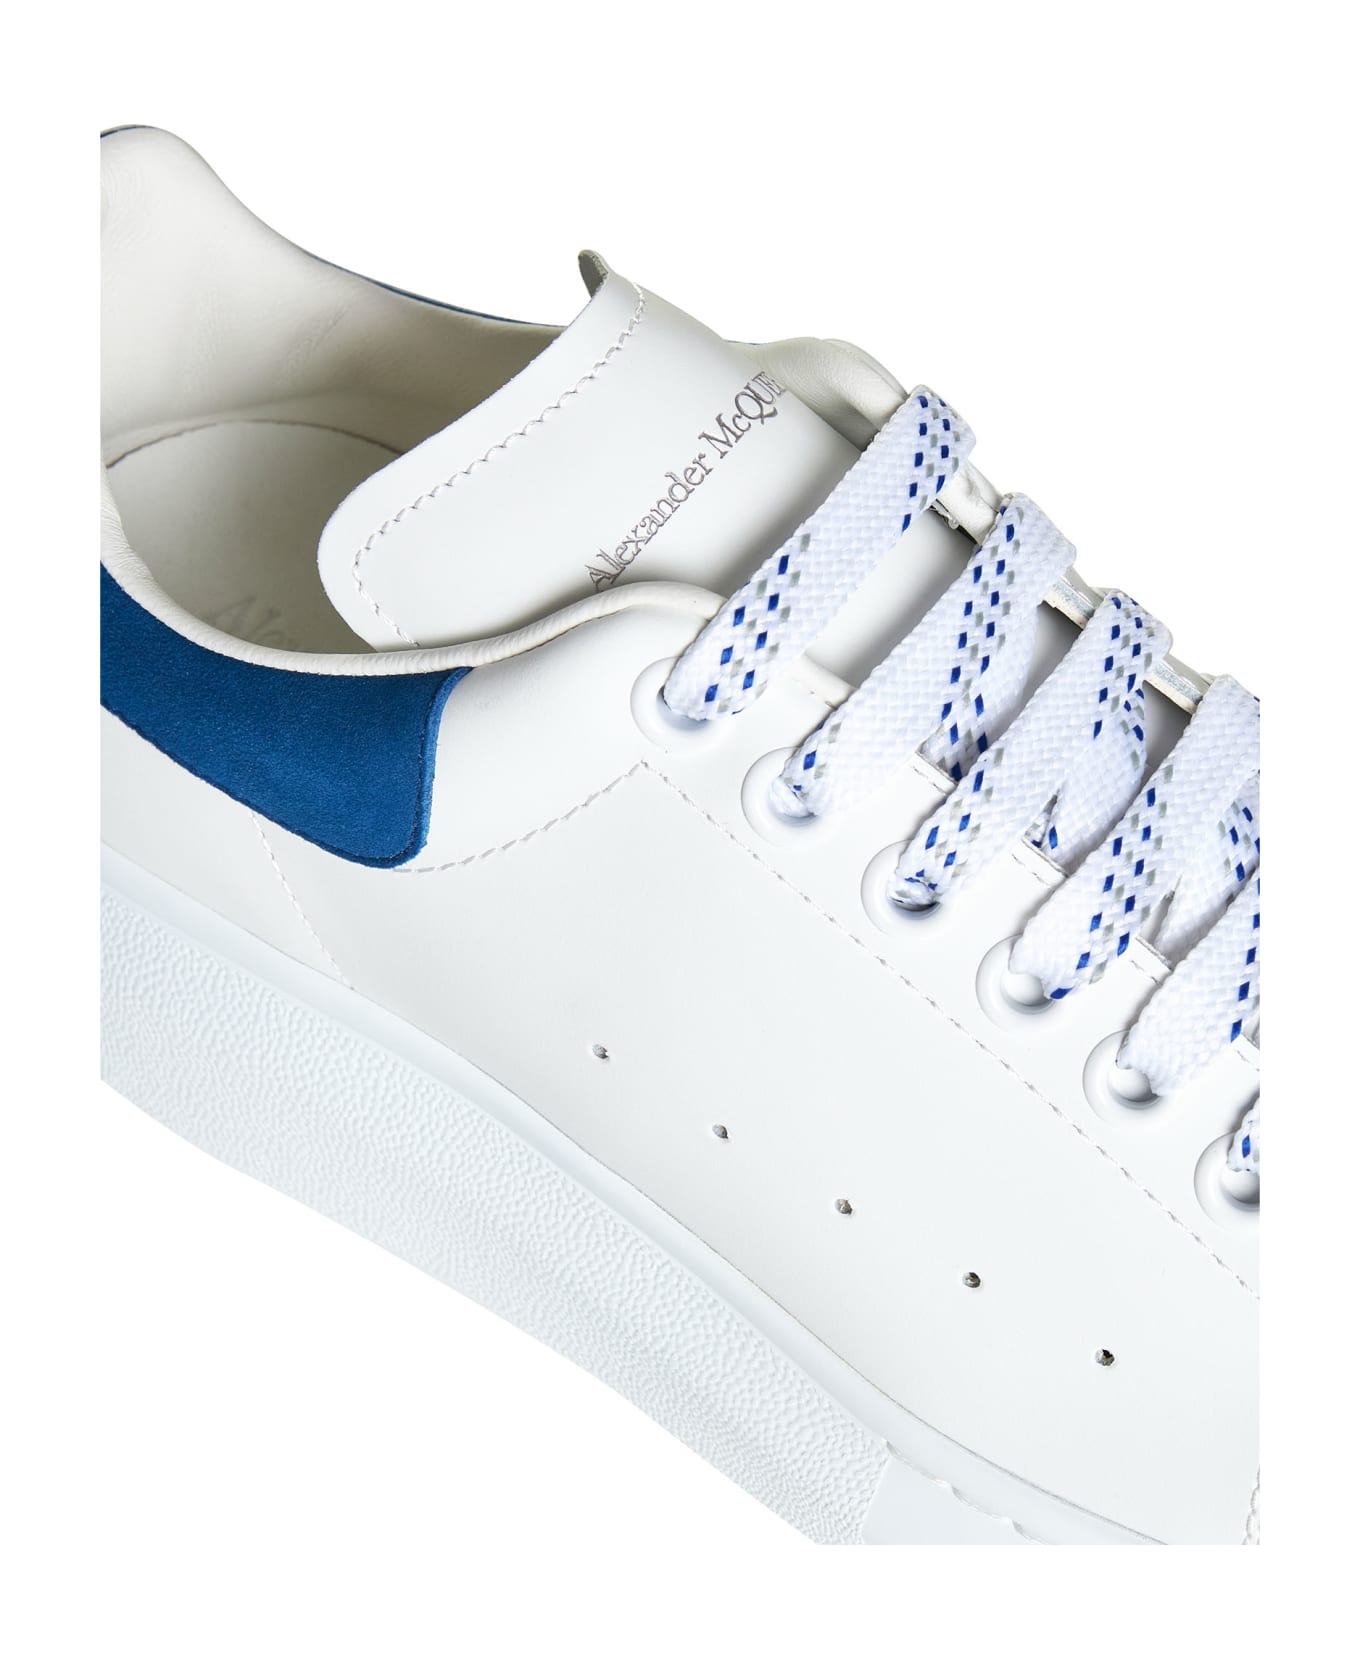 Alexander McQueen Sneakers - White paris blue 161